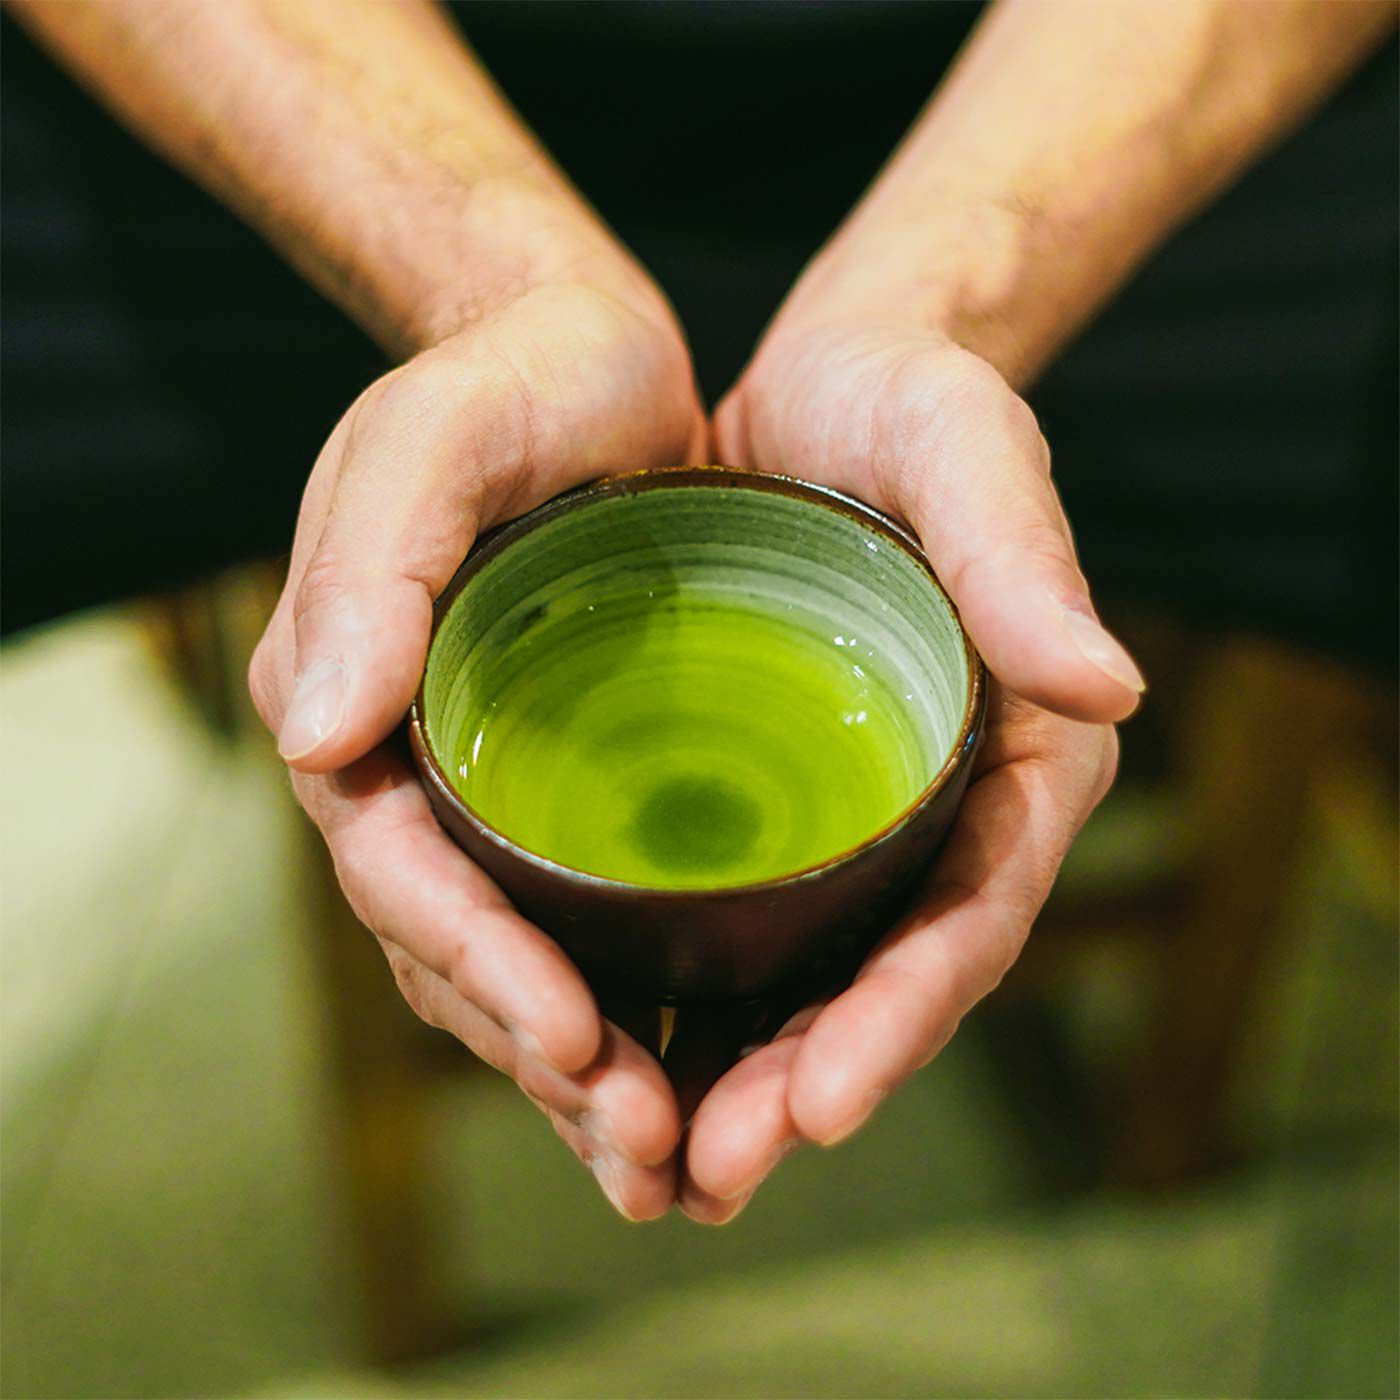 FELISSIMO PARTNERS|茶師 辻重行の一煎　粉末緑茶 1回分ずつ出せるオリジナルボトル付き